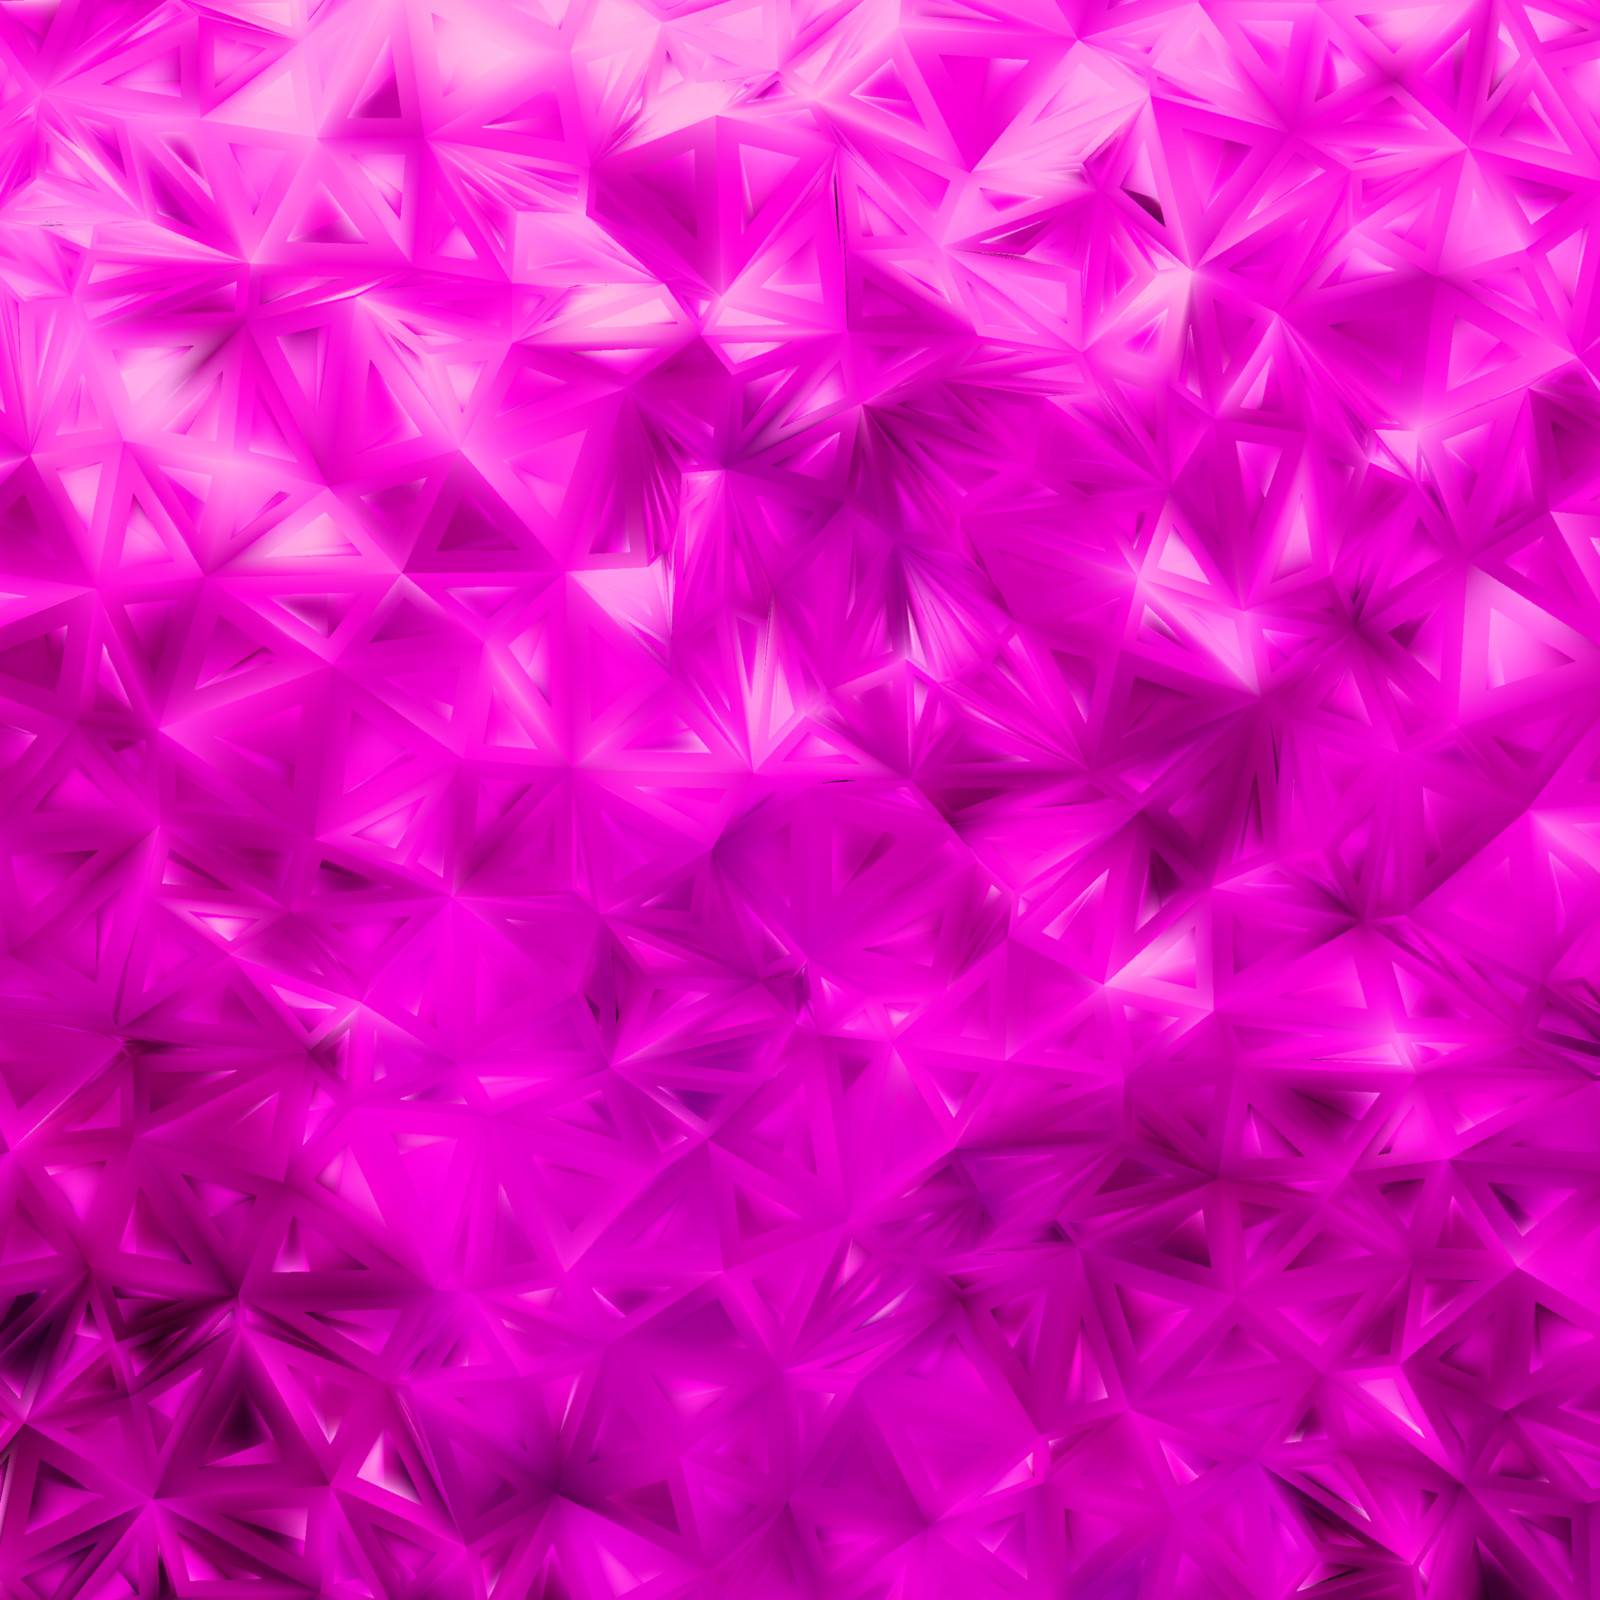 Glow purple mosaic background. EPS 8 by Petrov_Vladimir